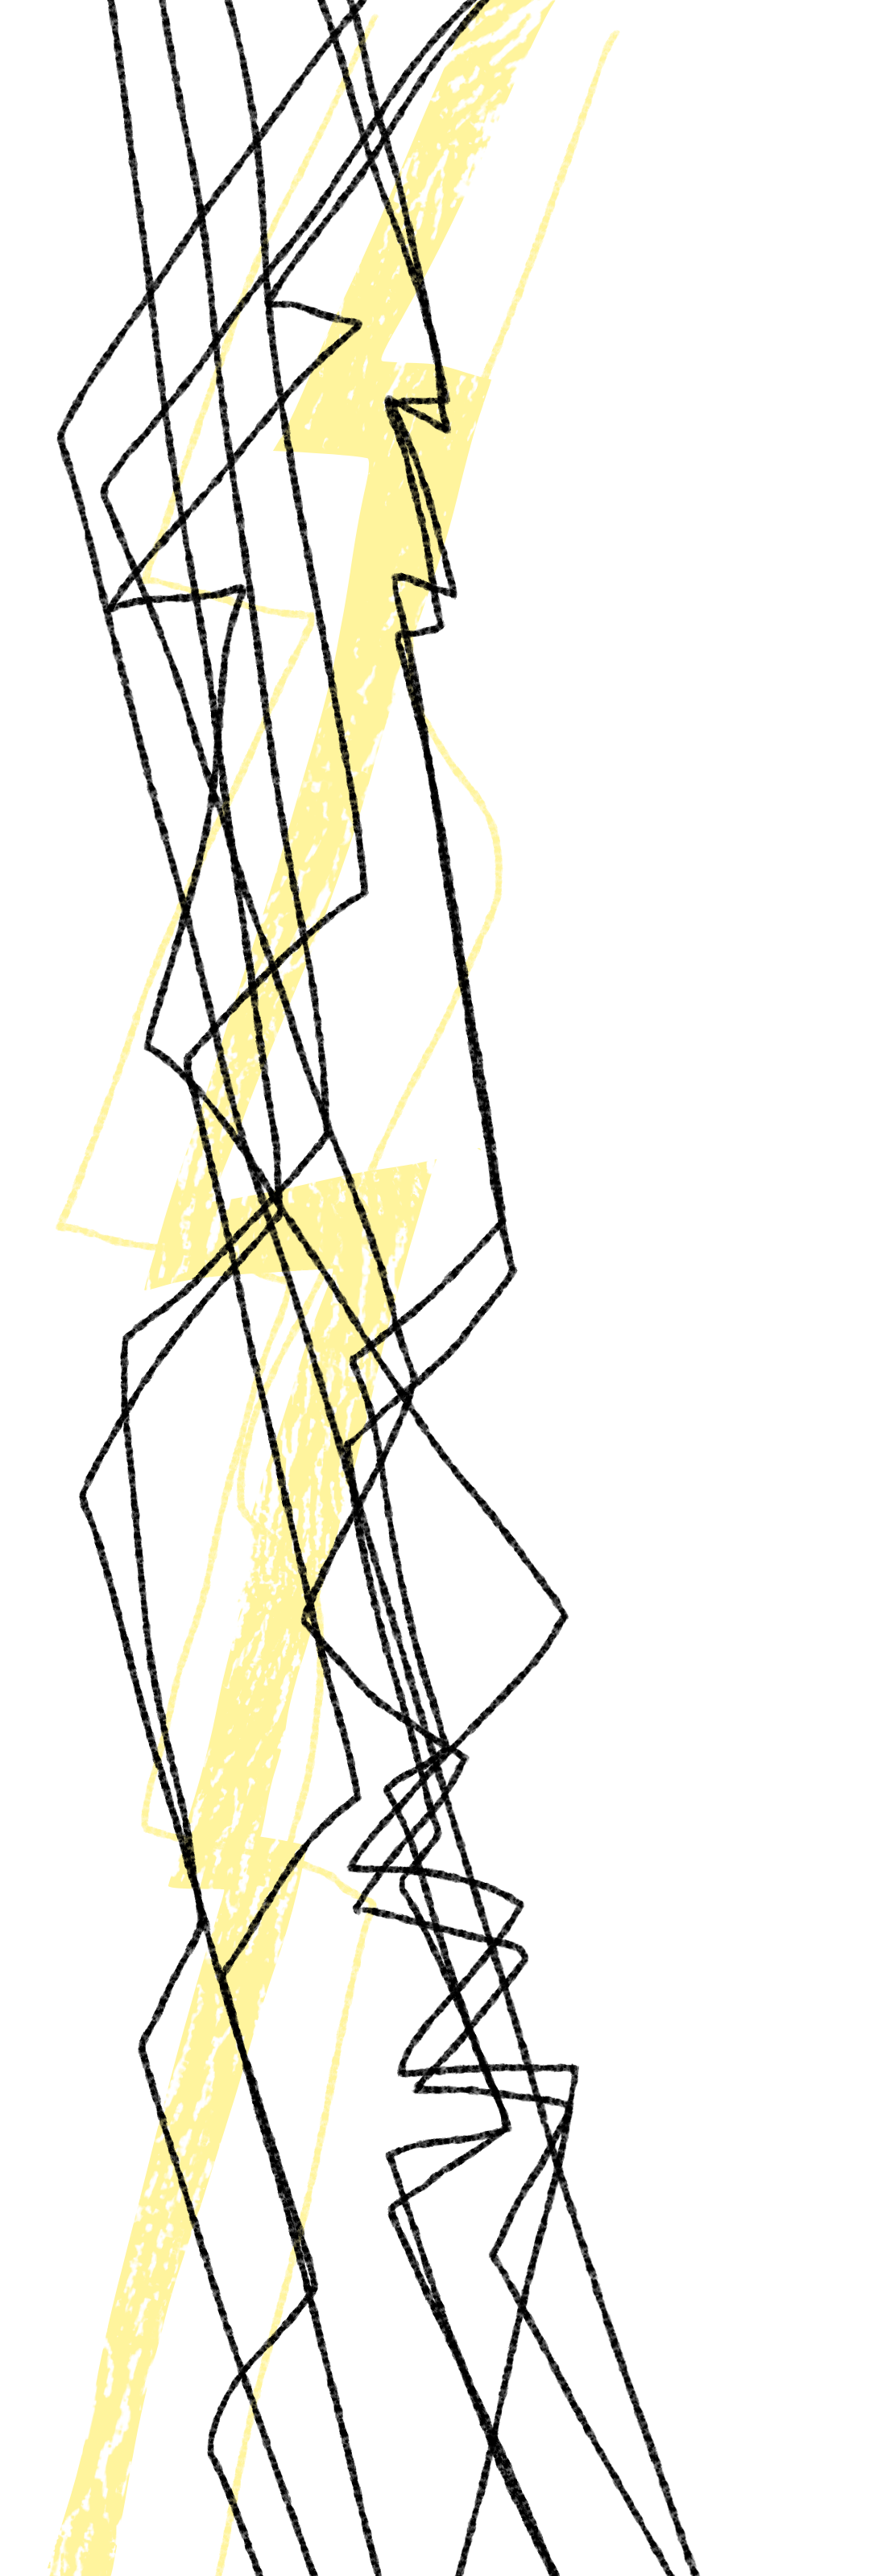 Illustration of jagged lines